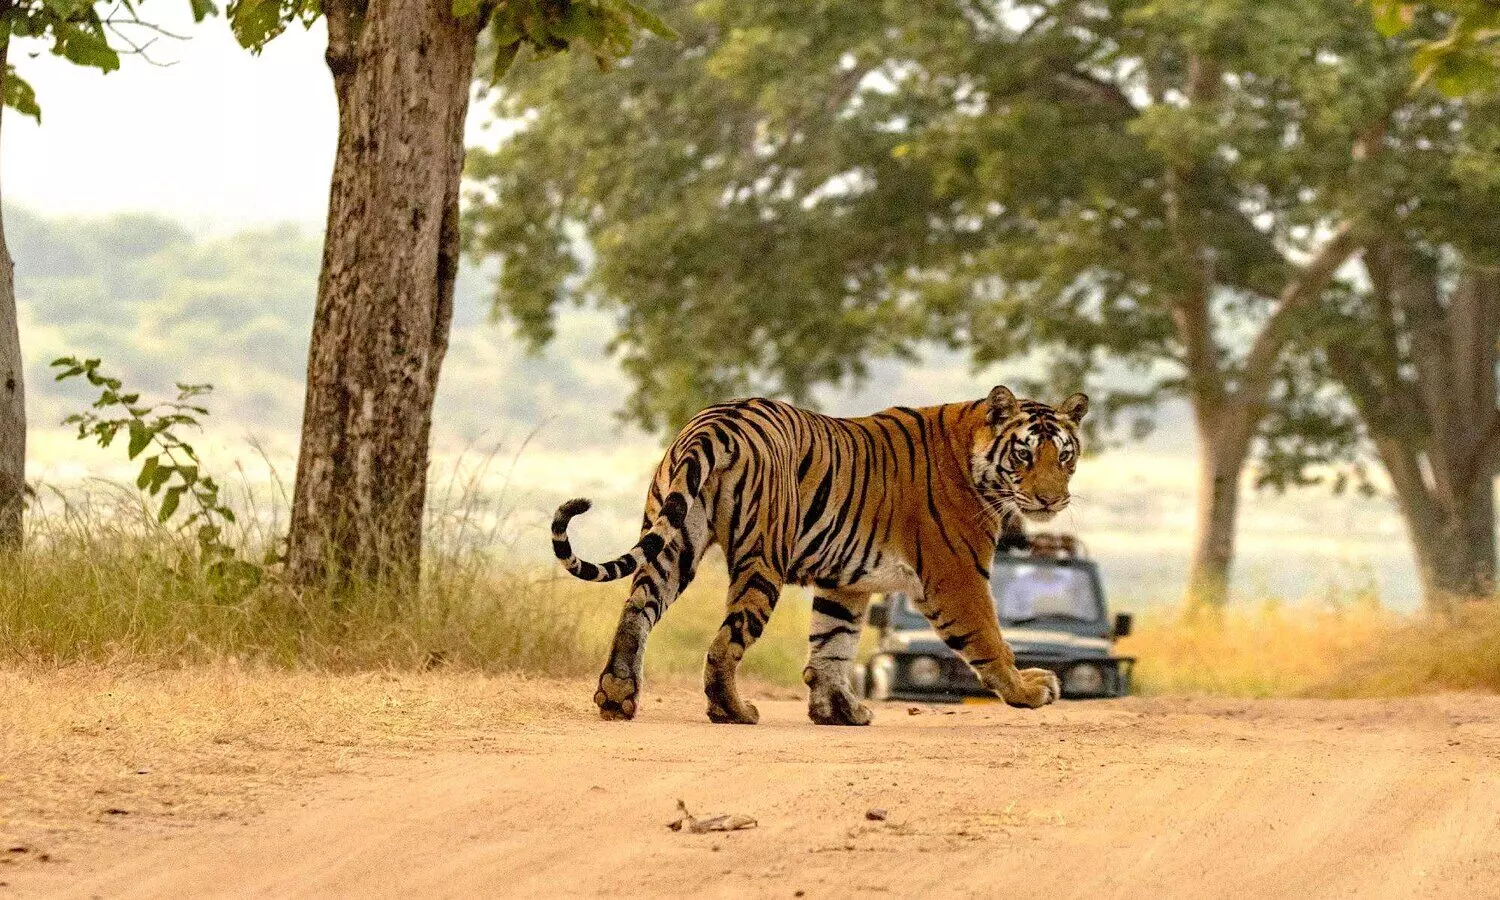 Ranipur Tiger Reserve